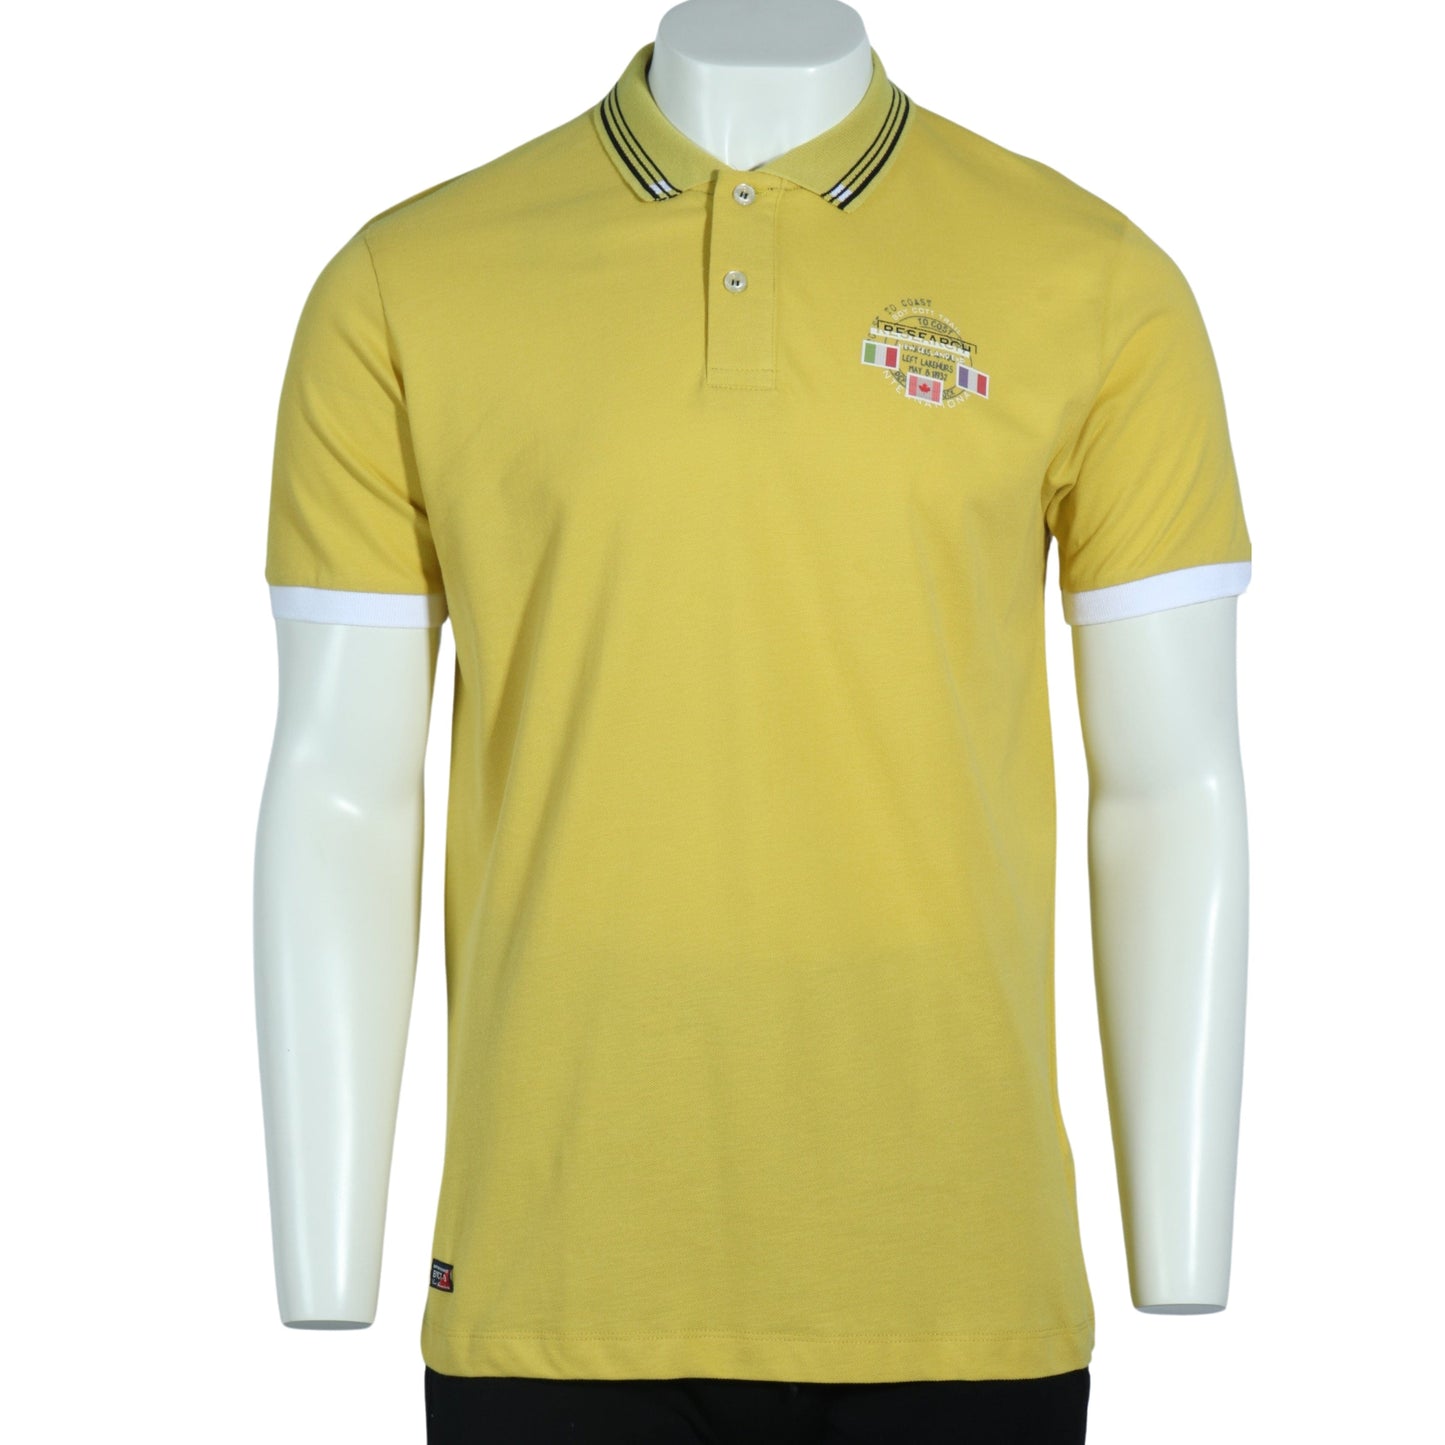 BOYCOTT Mens Tops XL / Yellow BOYCOTT - Pull Over T-Shirt